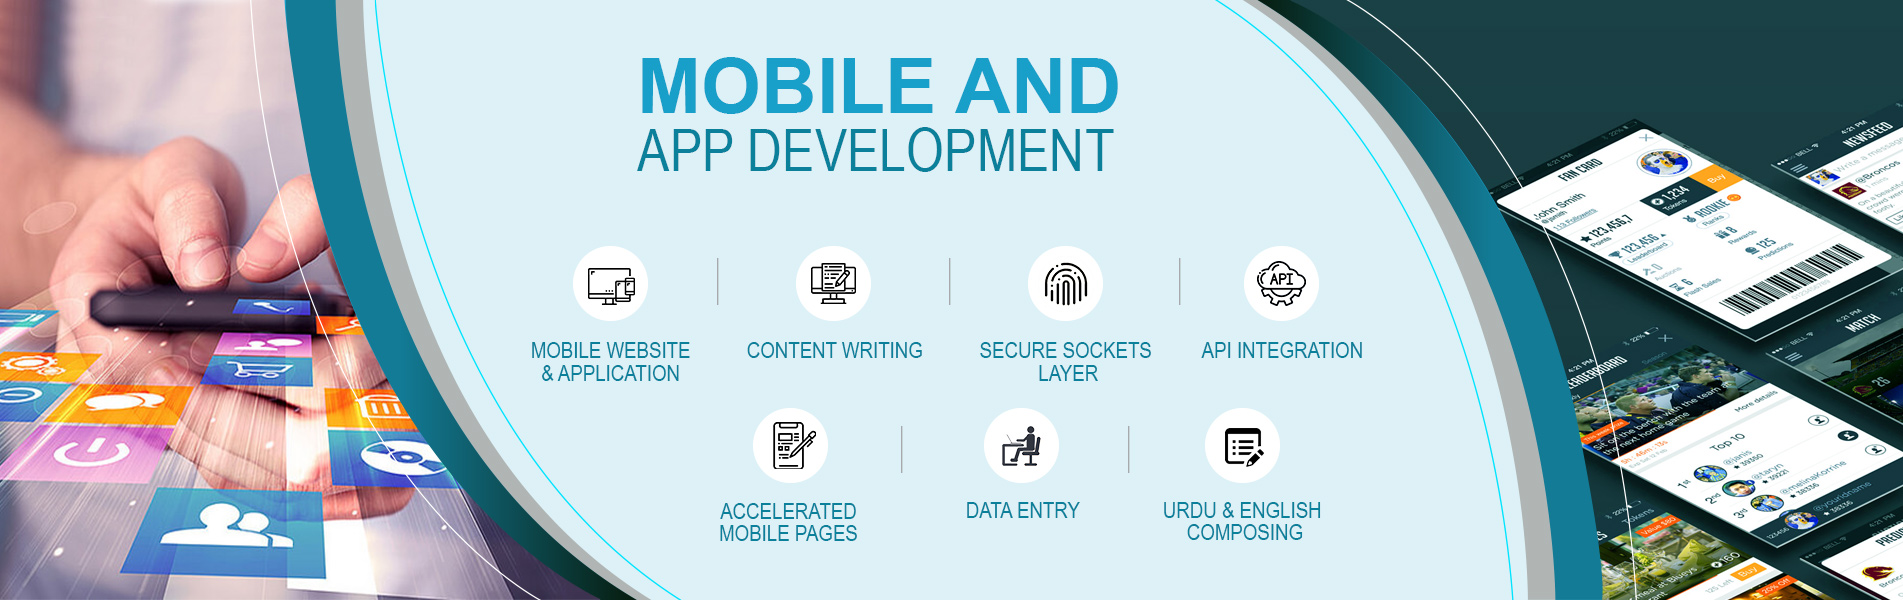 Mobile and App Development